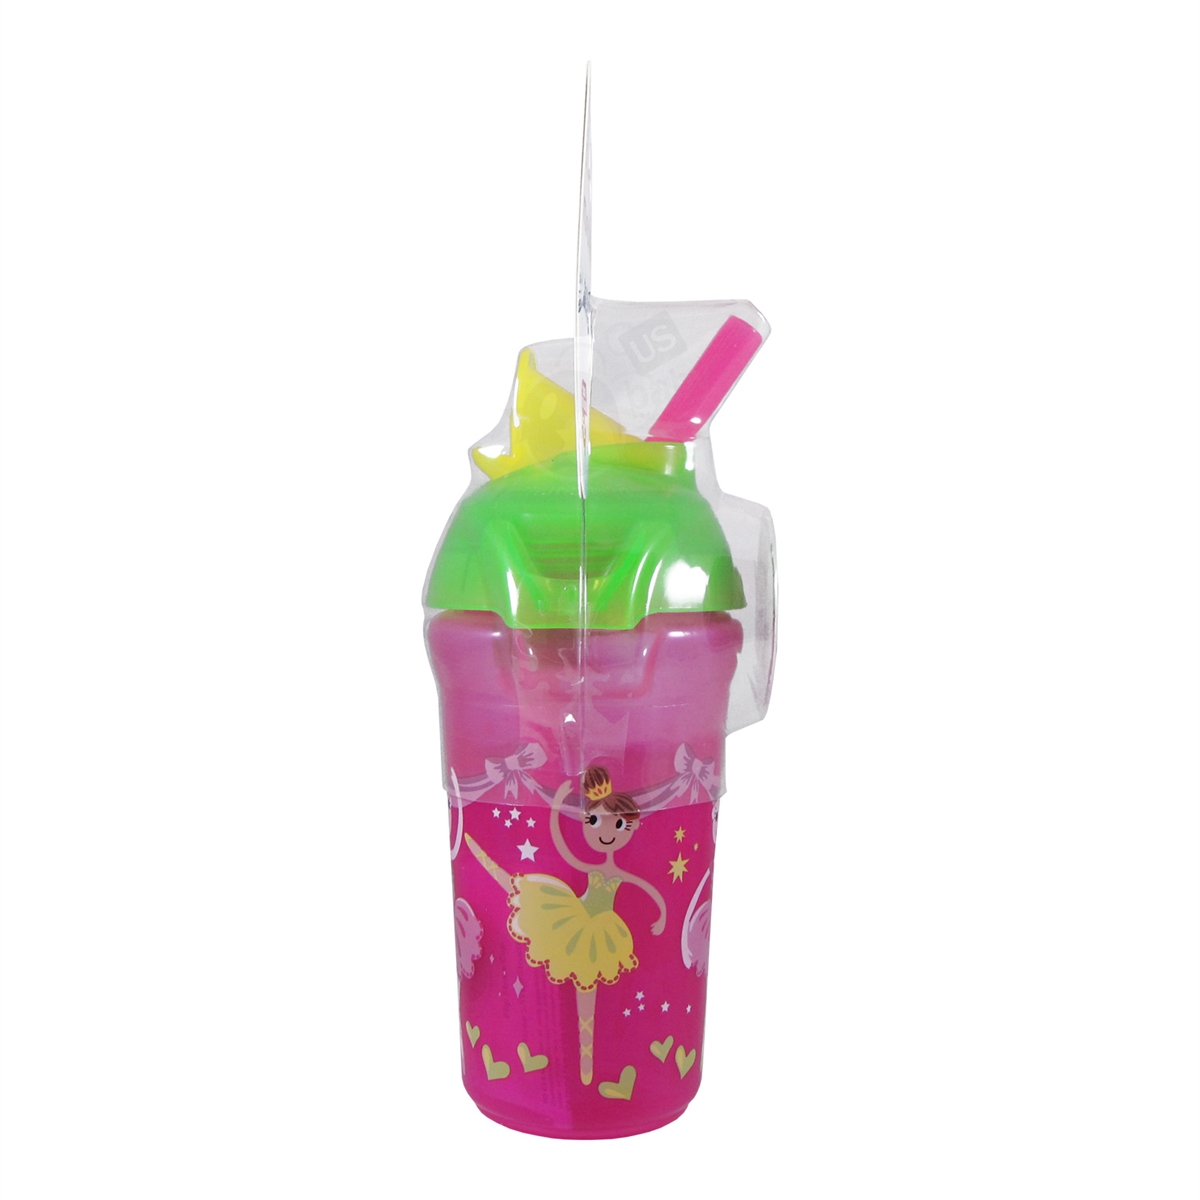 Hello Kitty Straw Cup - 8 oz. (Munchkin)